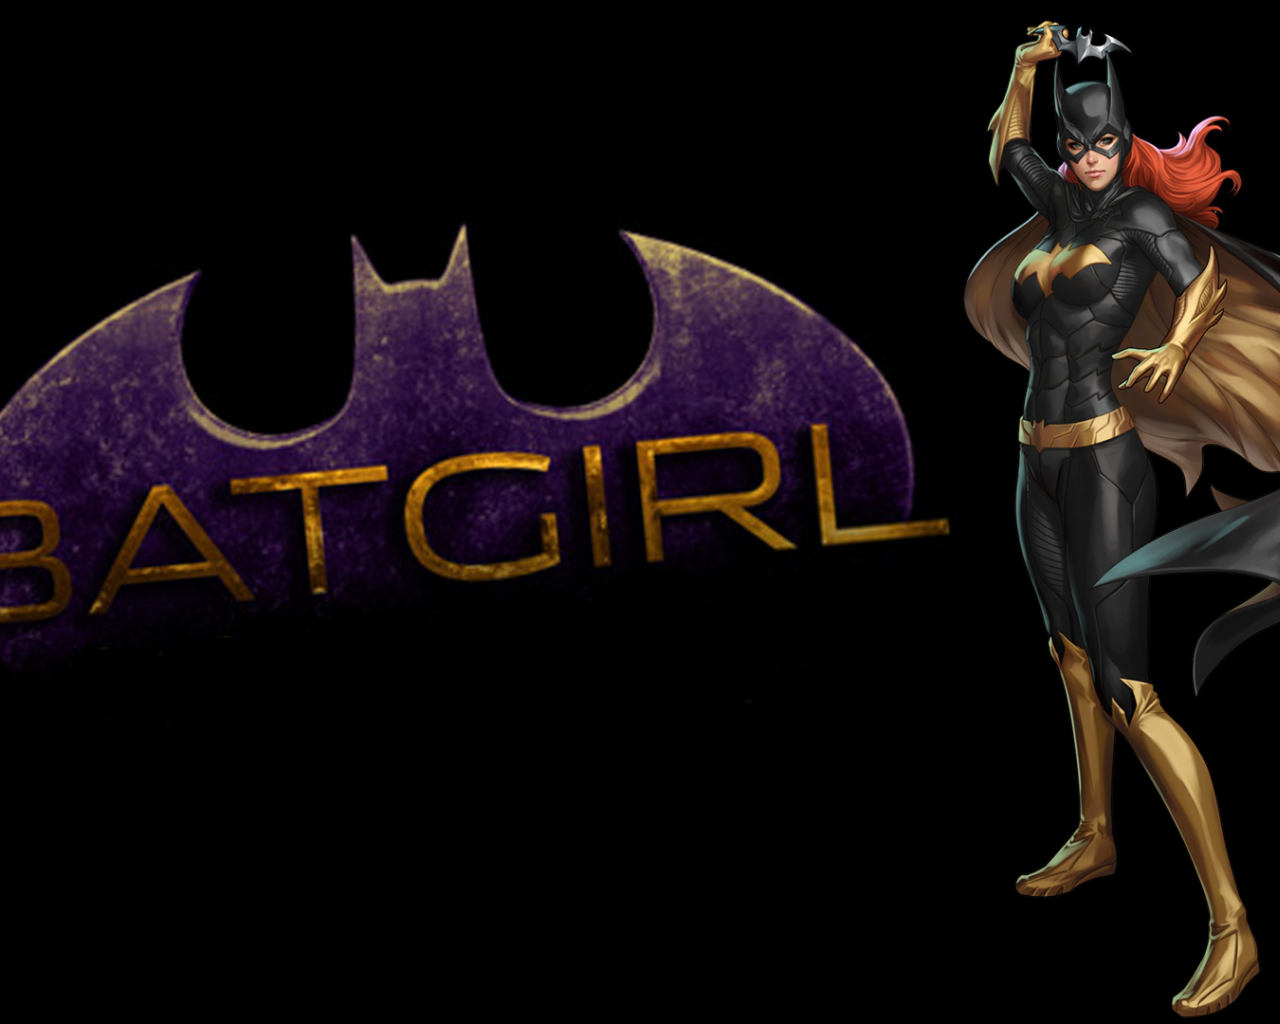 Batgirl Wallpaper from DC Comics .wallpaperafari.com